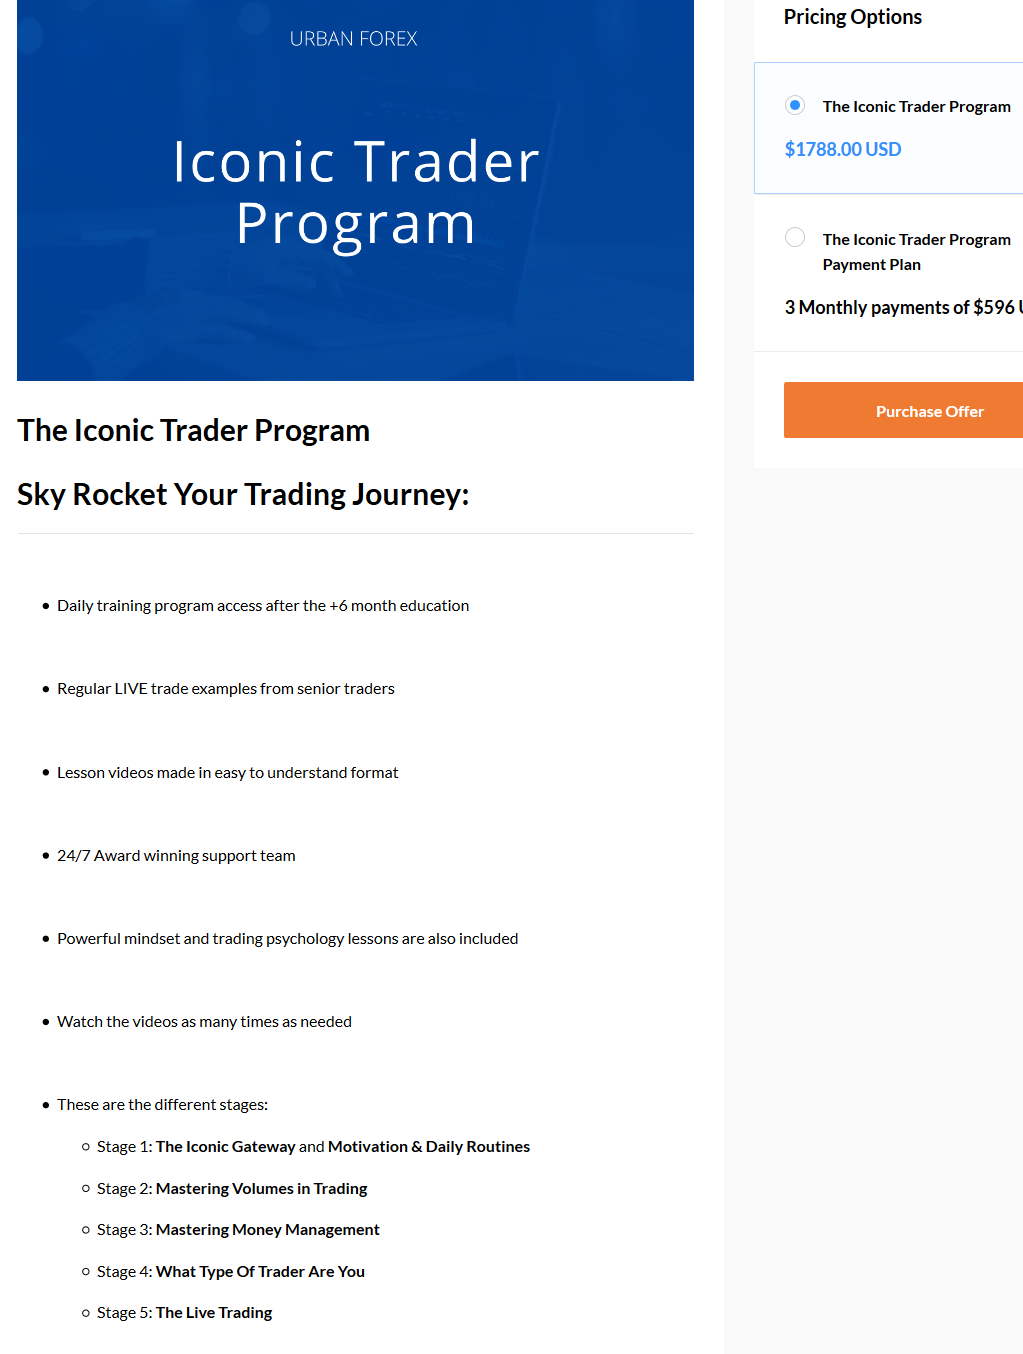 Urban forex - Iconic Trader Program